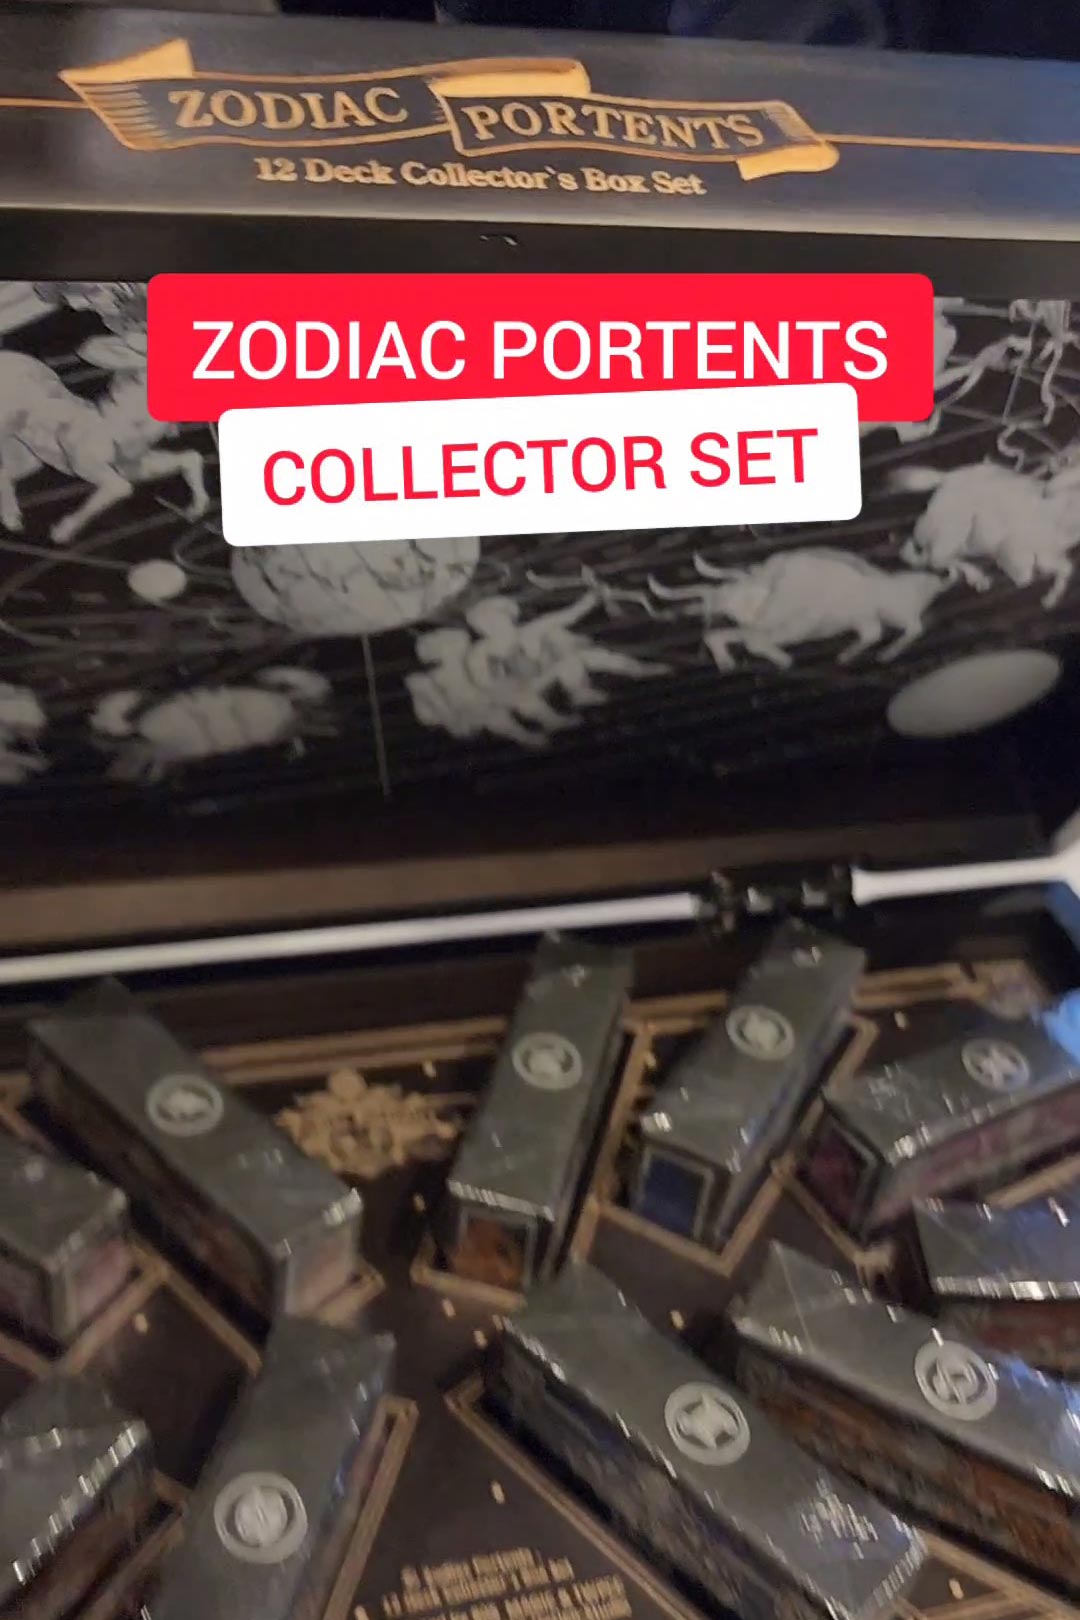 Zodiac Portents Collector Set!